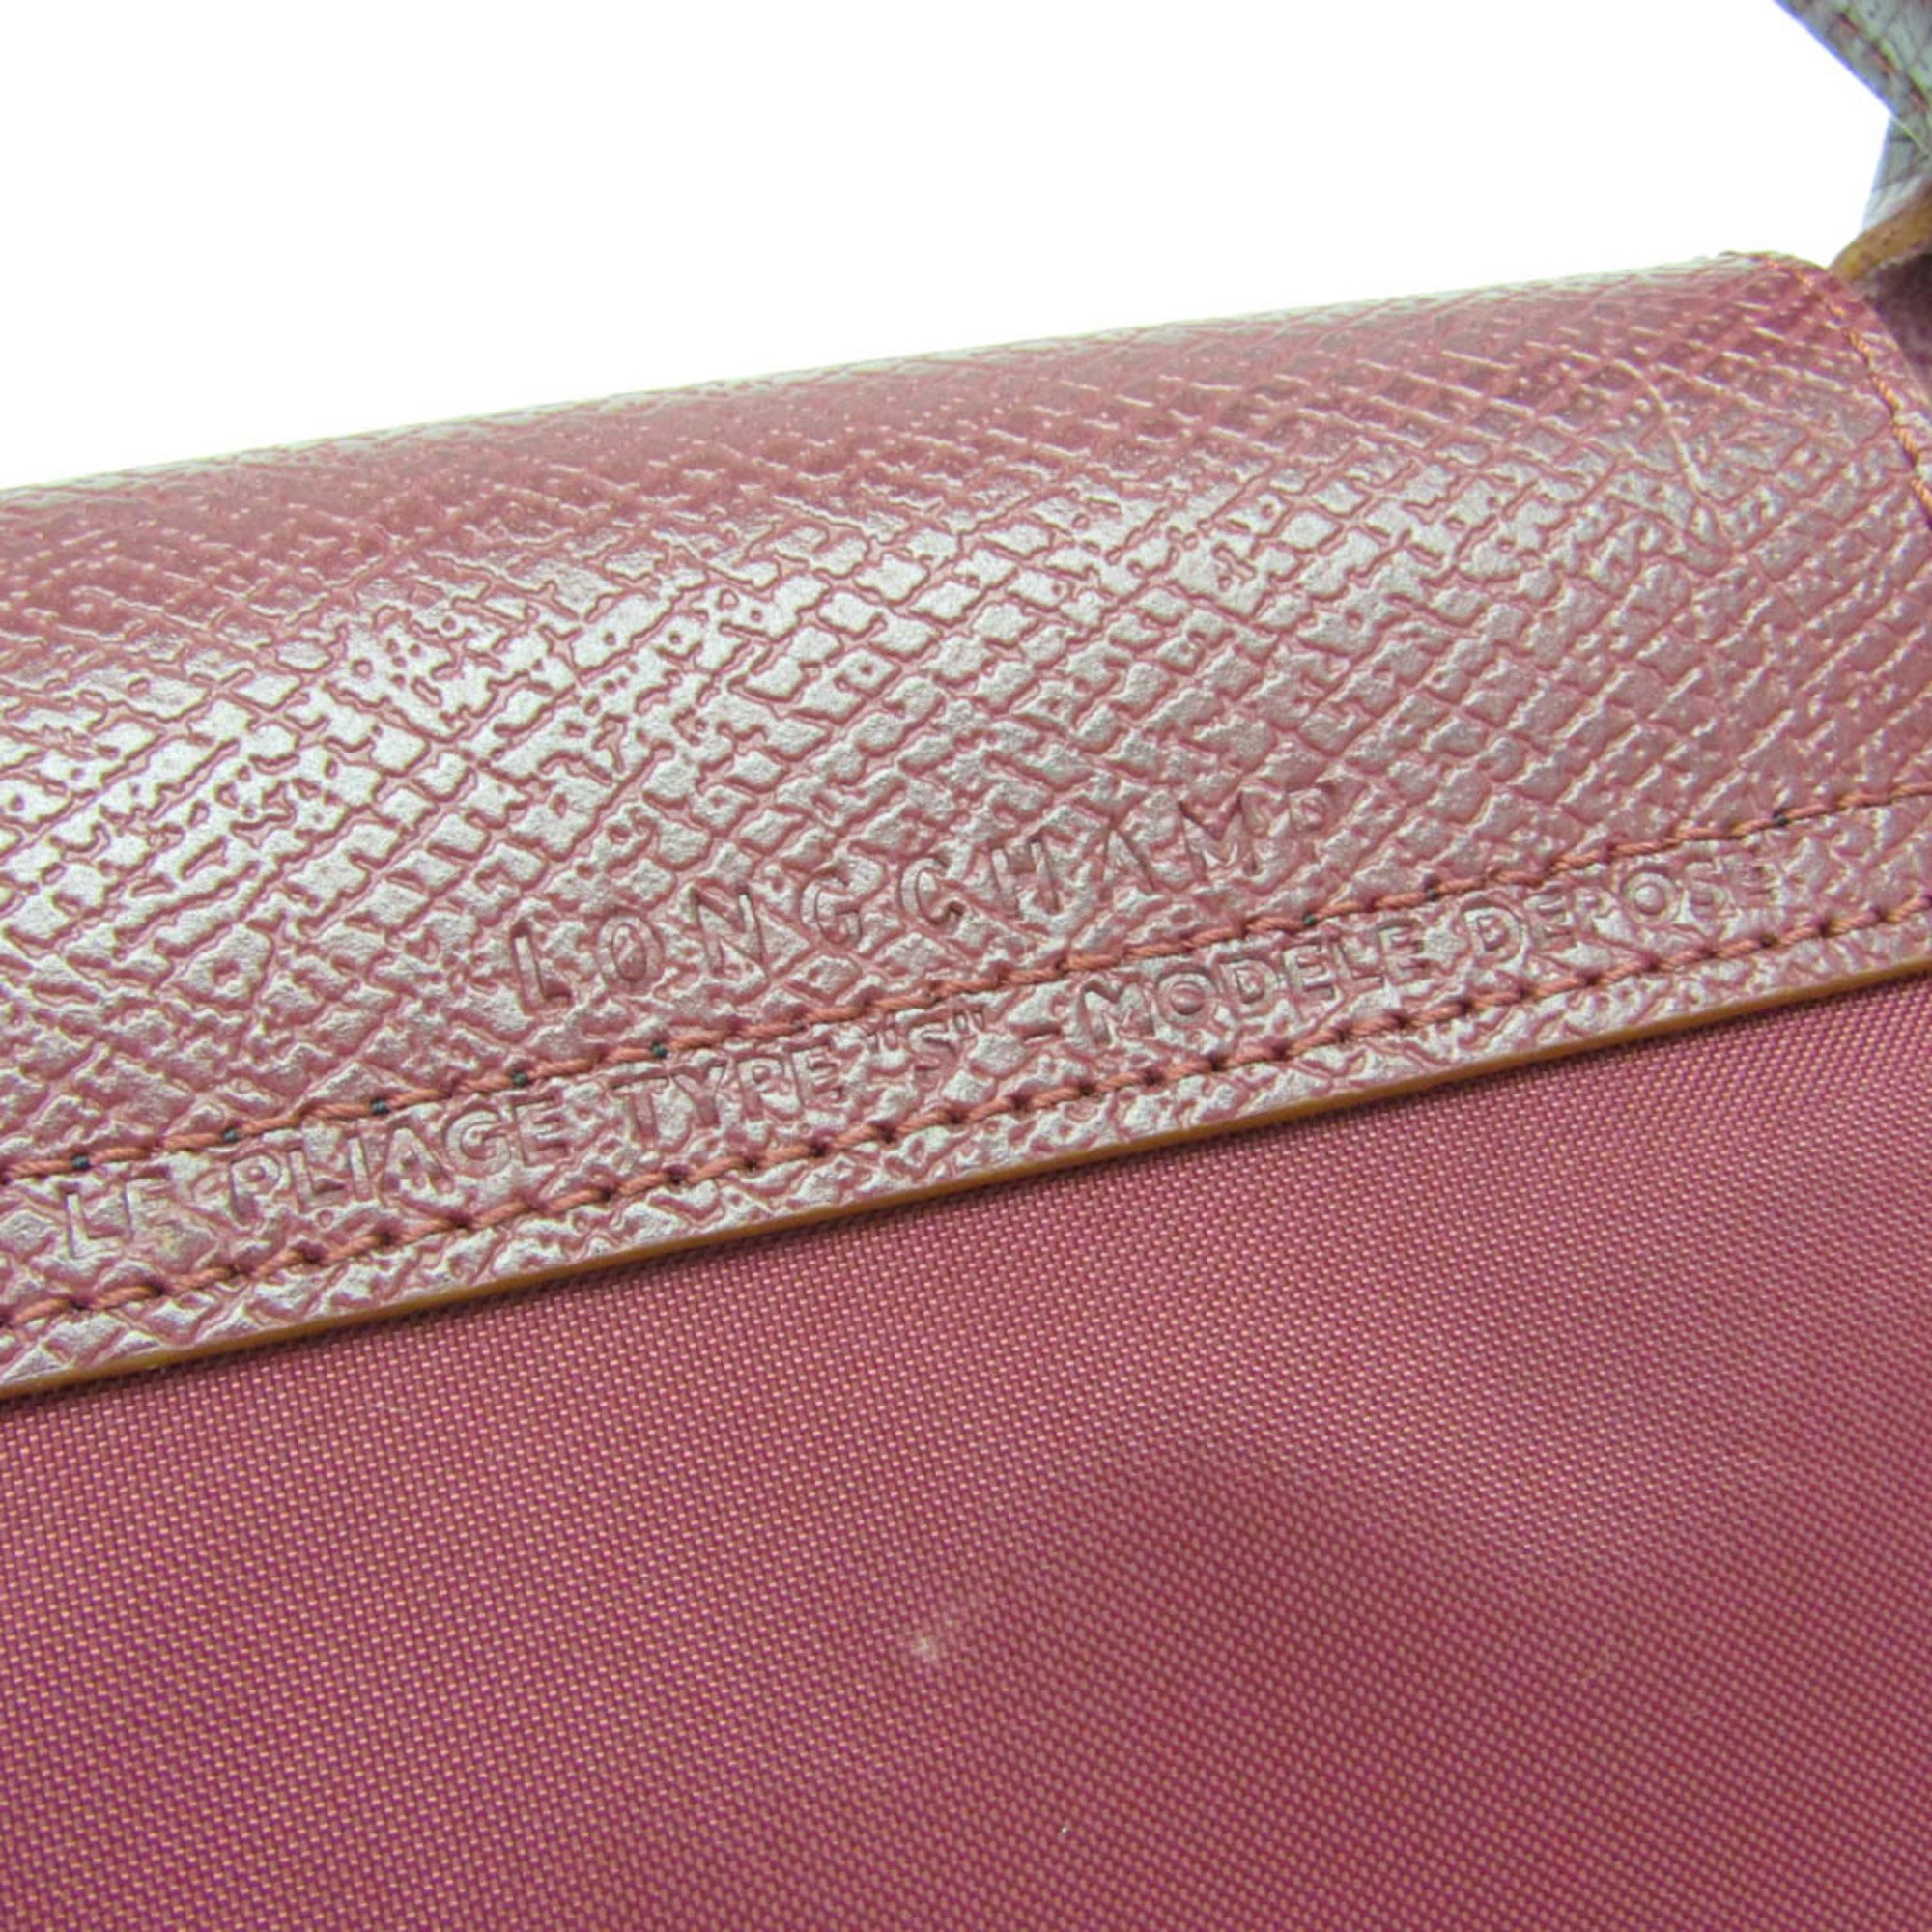 Longchamp Le Pliage Club 1621 619 209 Women's Nylon,Leather Folding Bag,Handbag Bordeaux